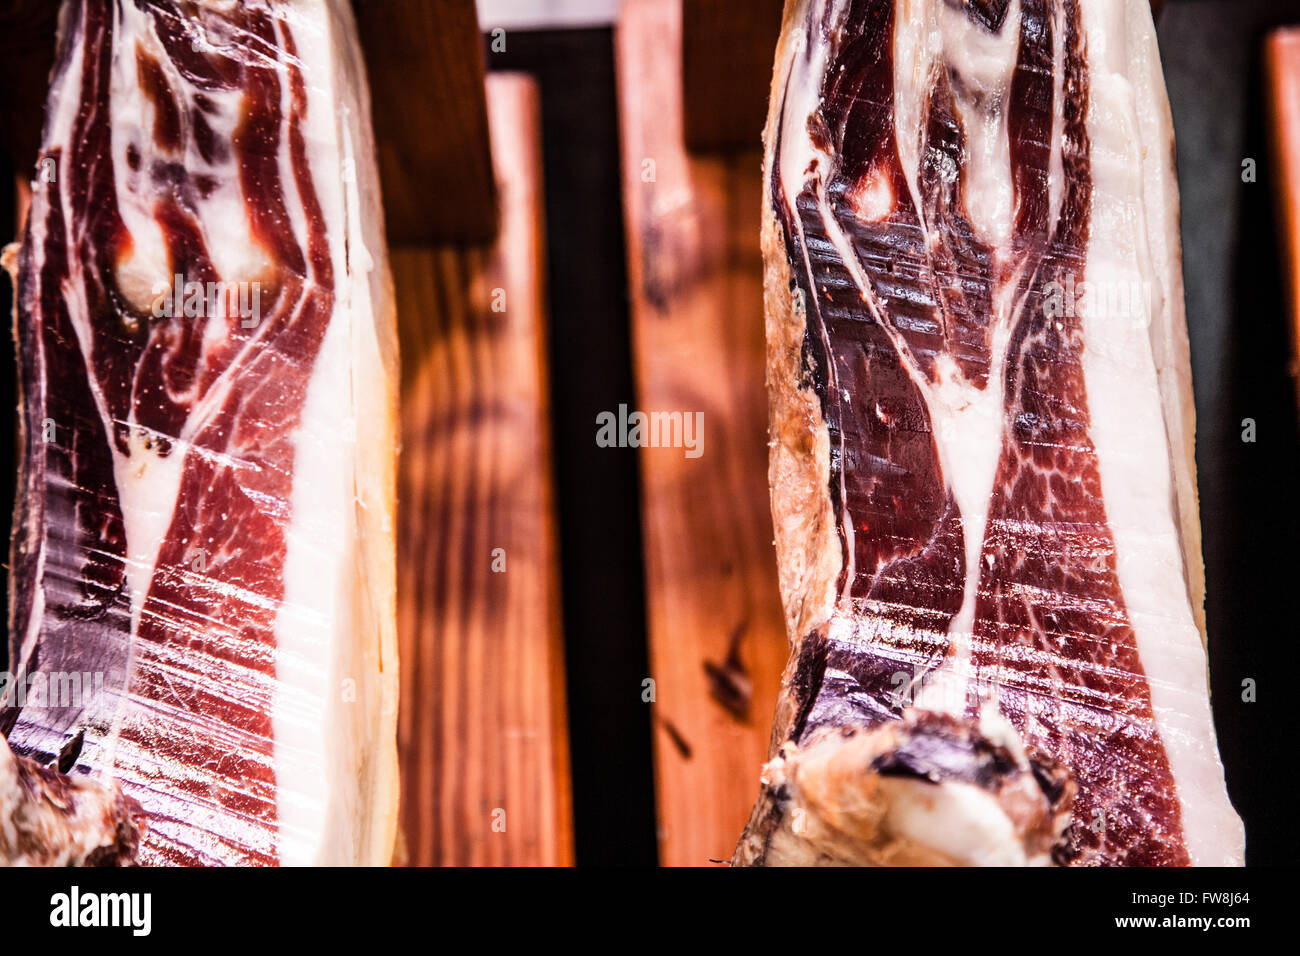 Jamon - traditional meat at spanish market Stock Photo